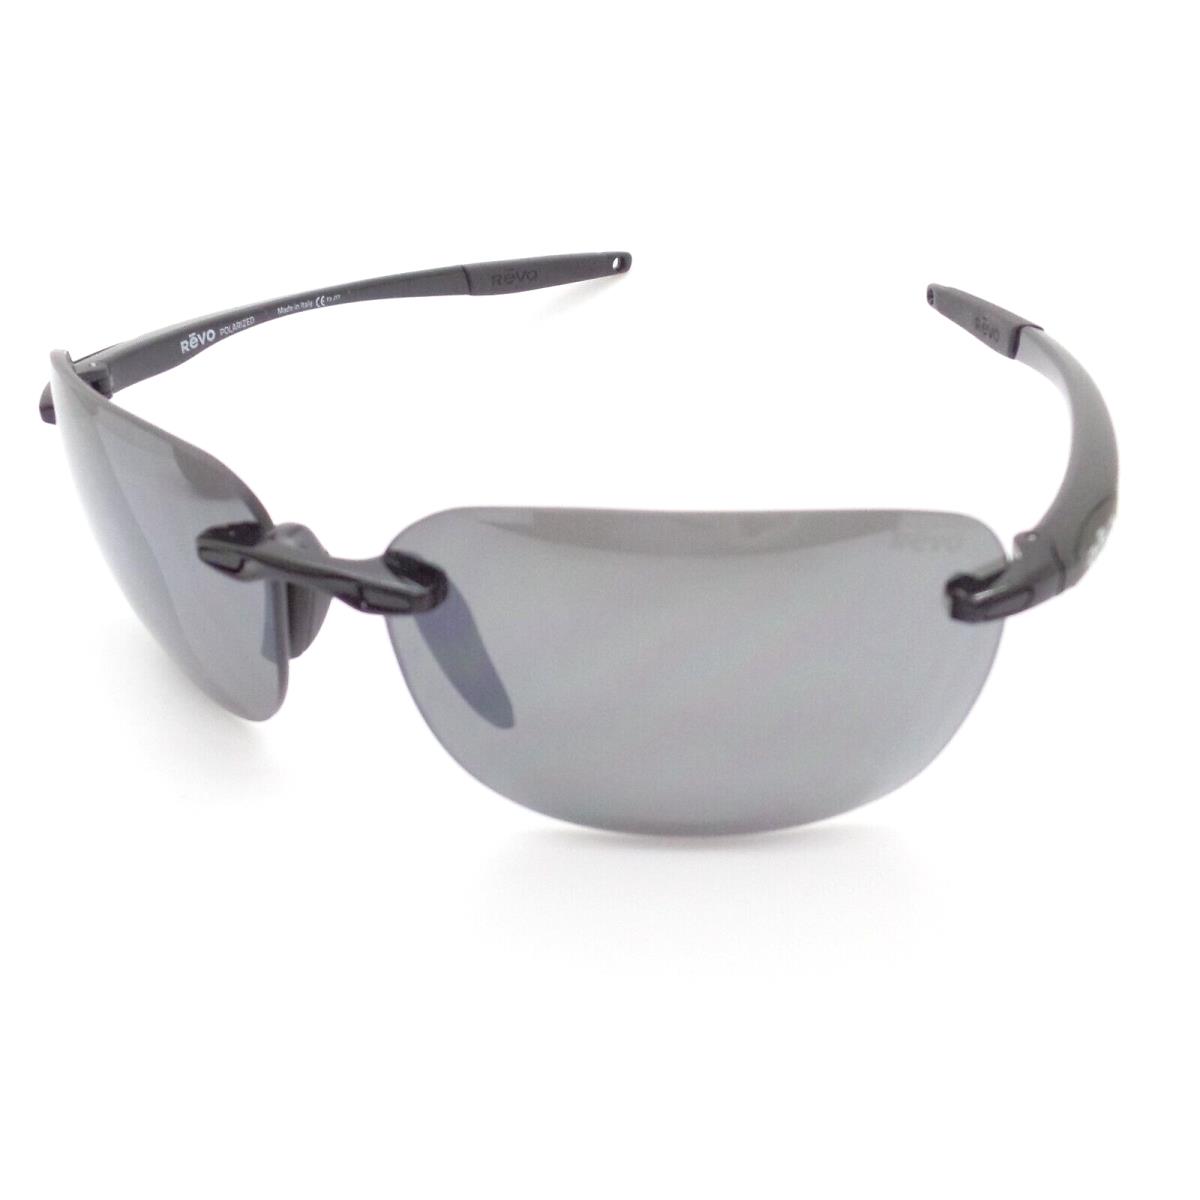 Revo sunglasses Descend - Black Frame, Graphite Lens 0